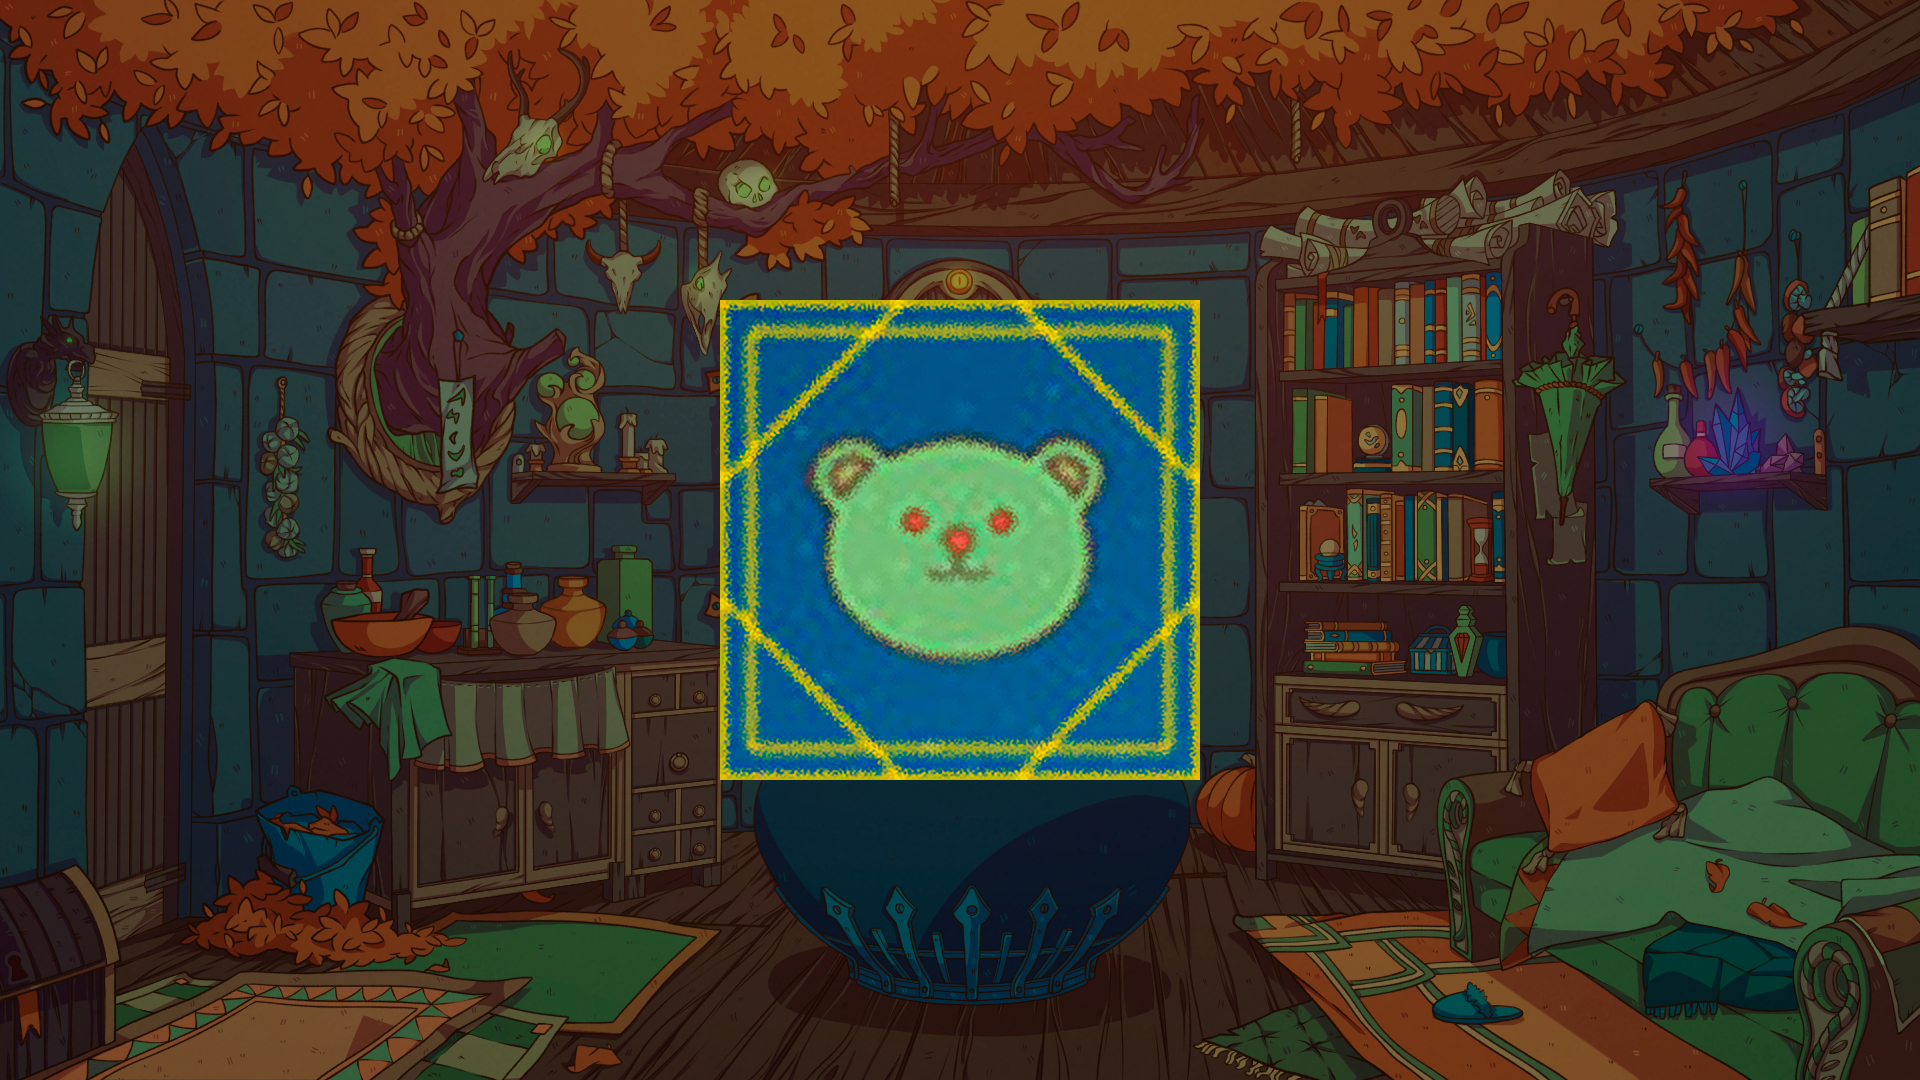 Icon for Teddy Bear